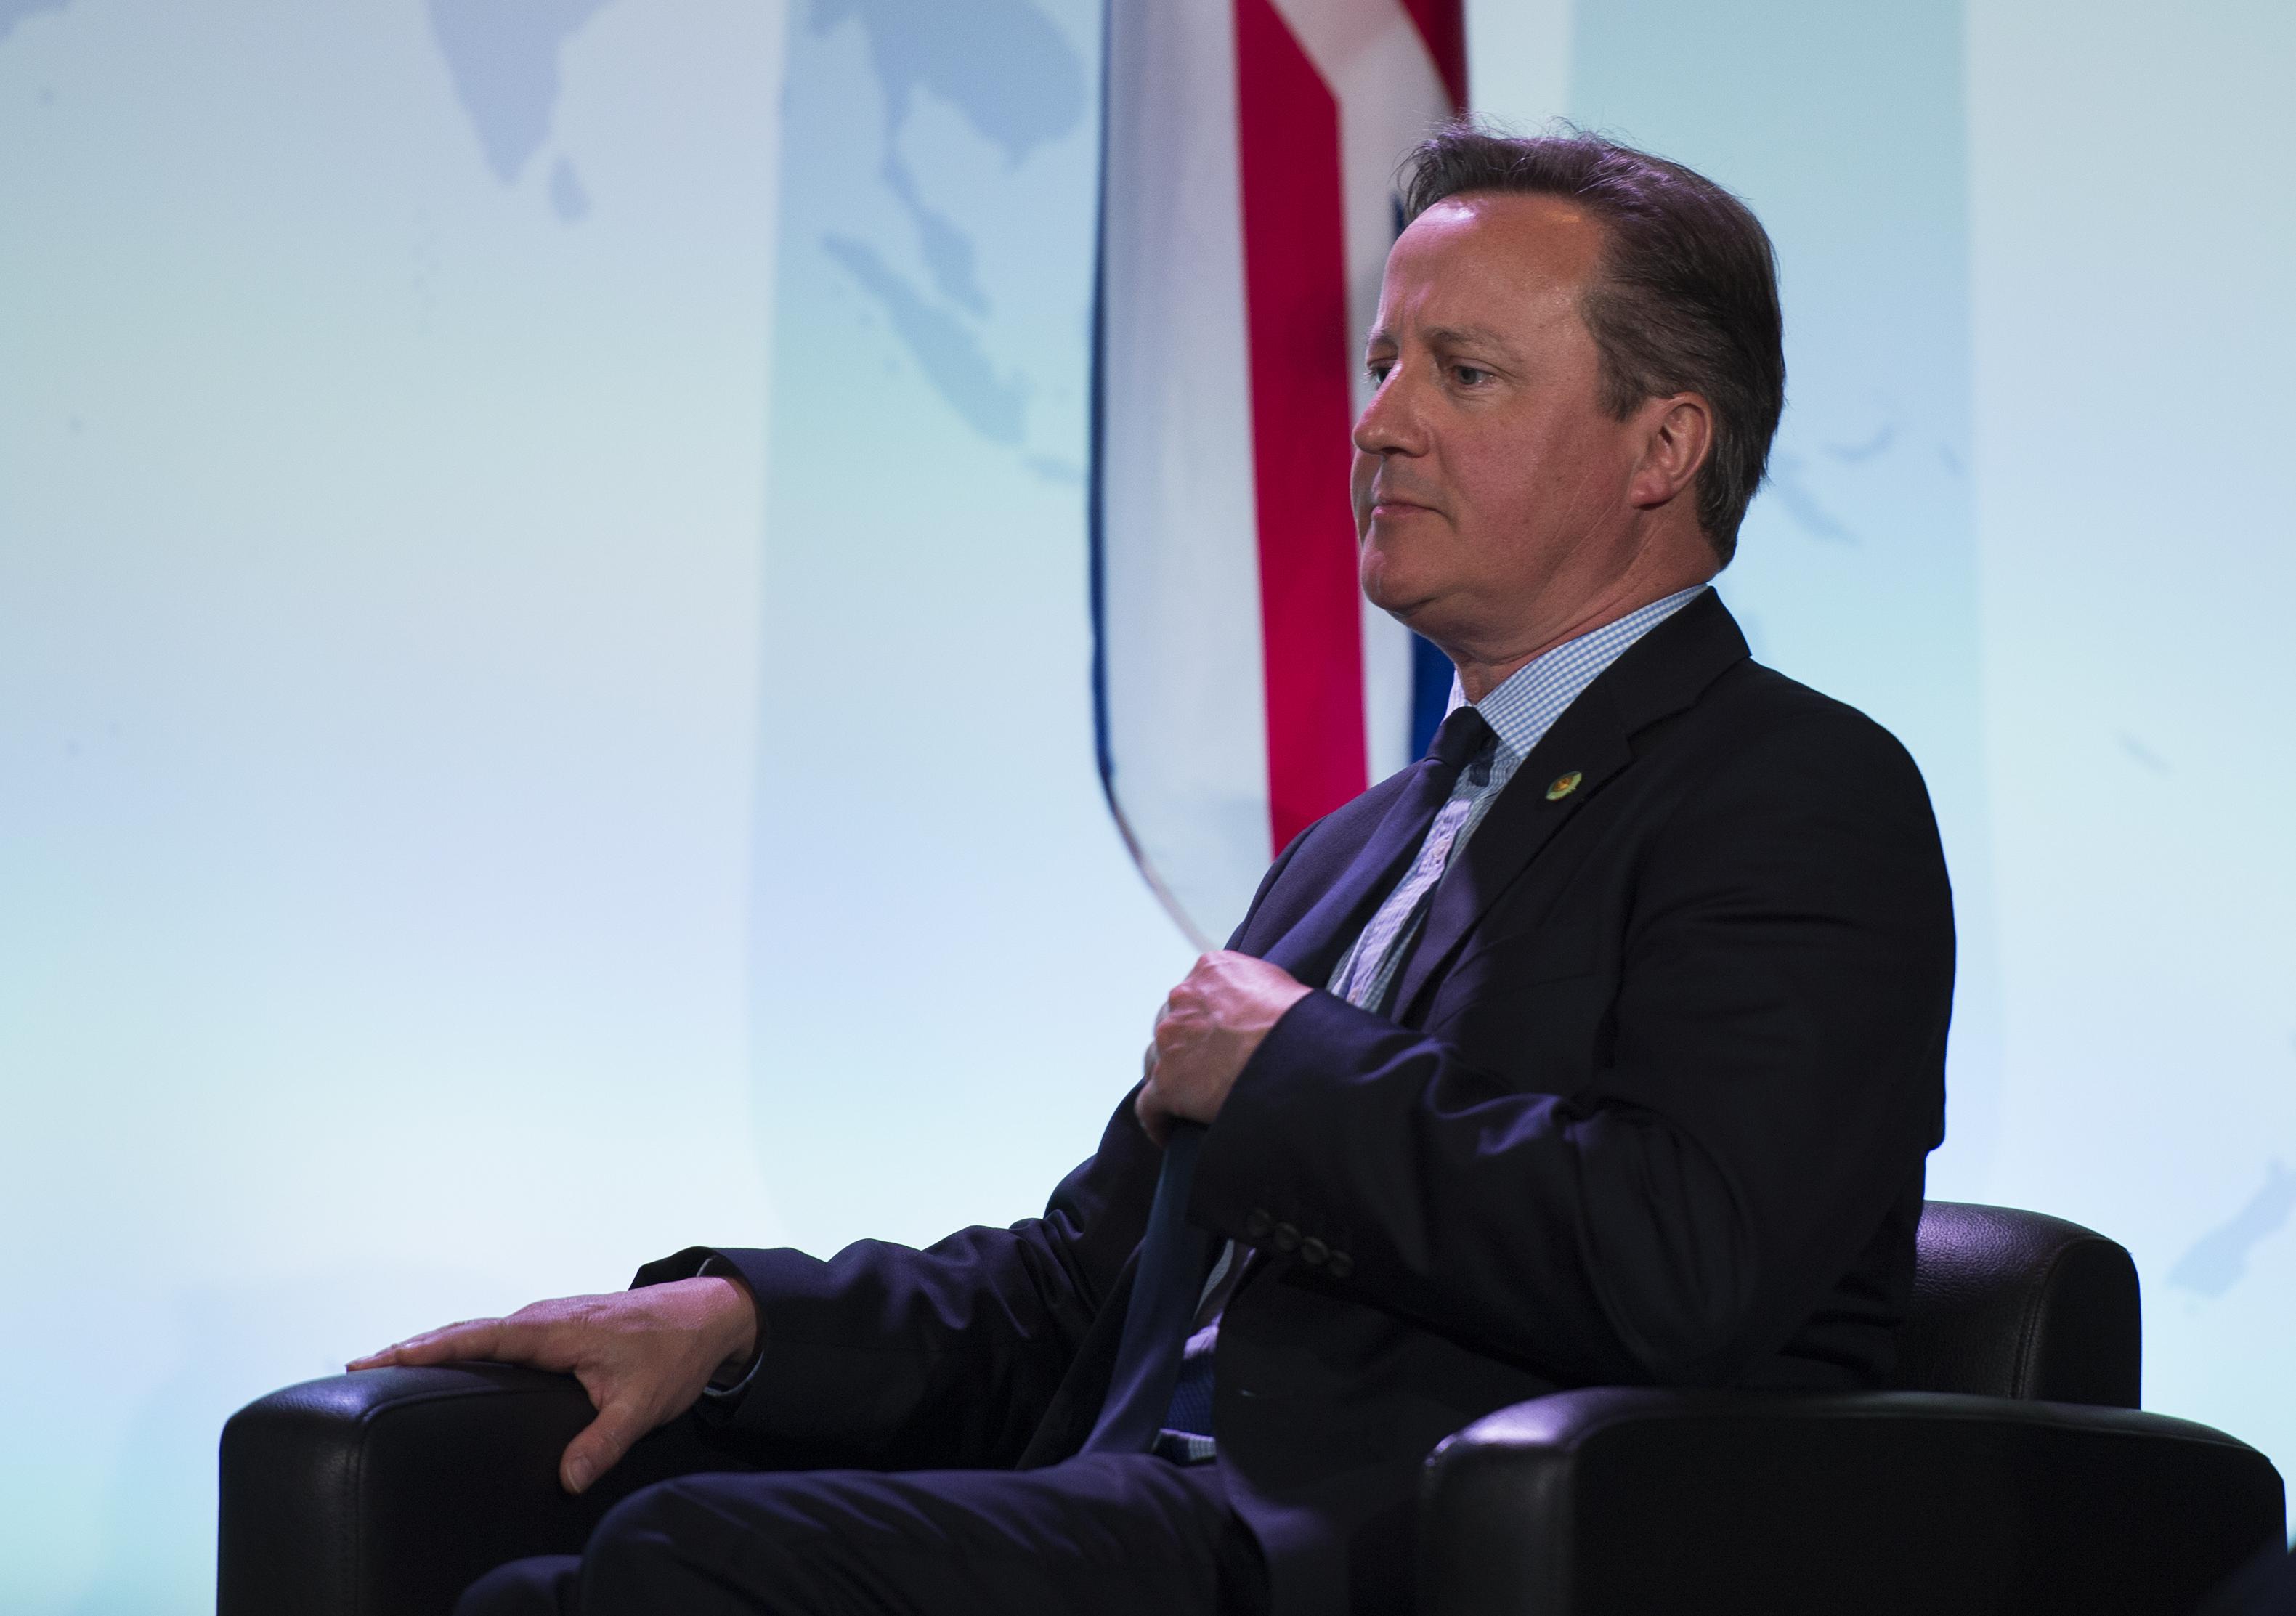 Il premier britannico David Cameron (Foto Afp)